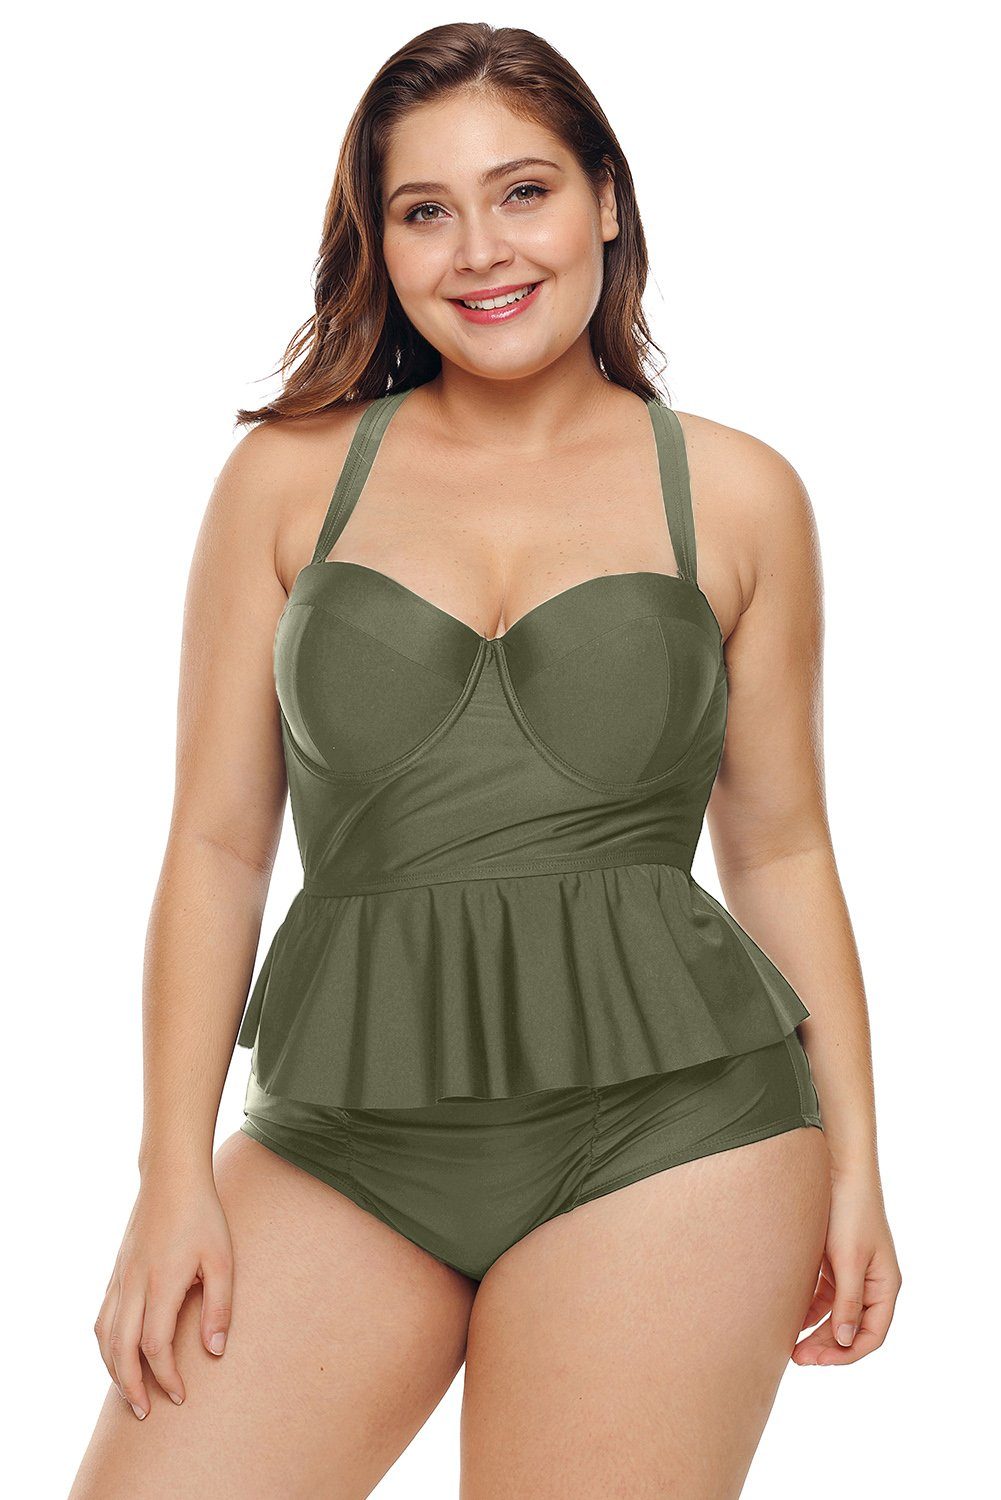 Women Plus Size Swimwear Olive Green Peplum Waist Tankini Two Piece Set Bikini 2 PC Swimsuit - KaleaBoutique.com